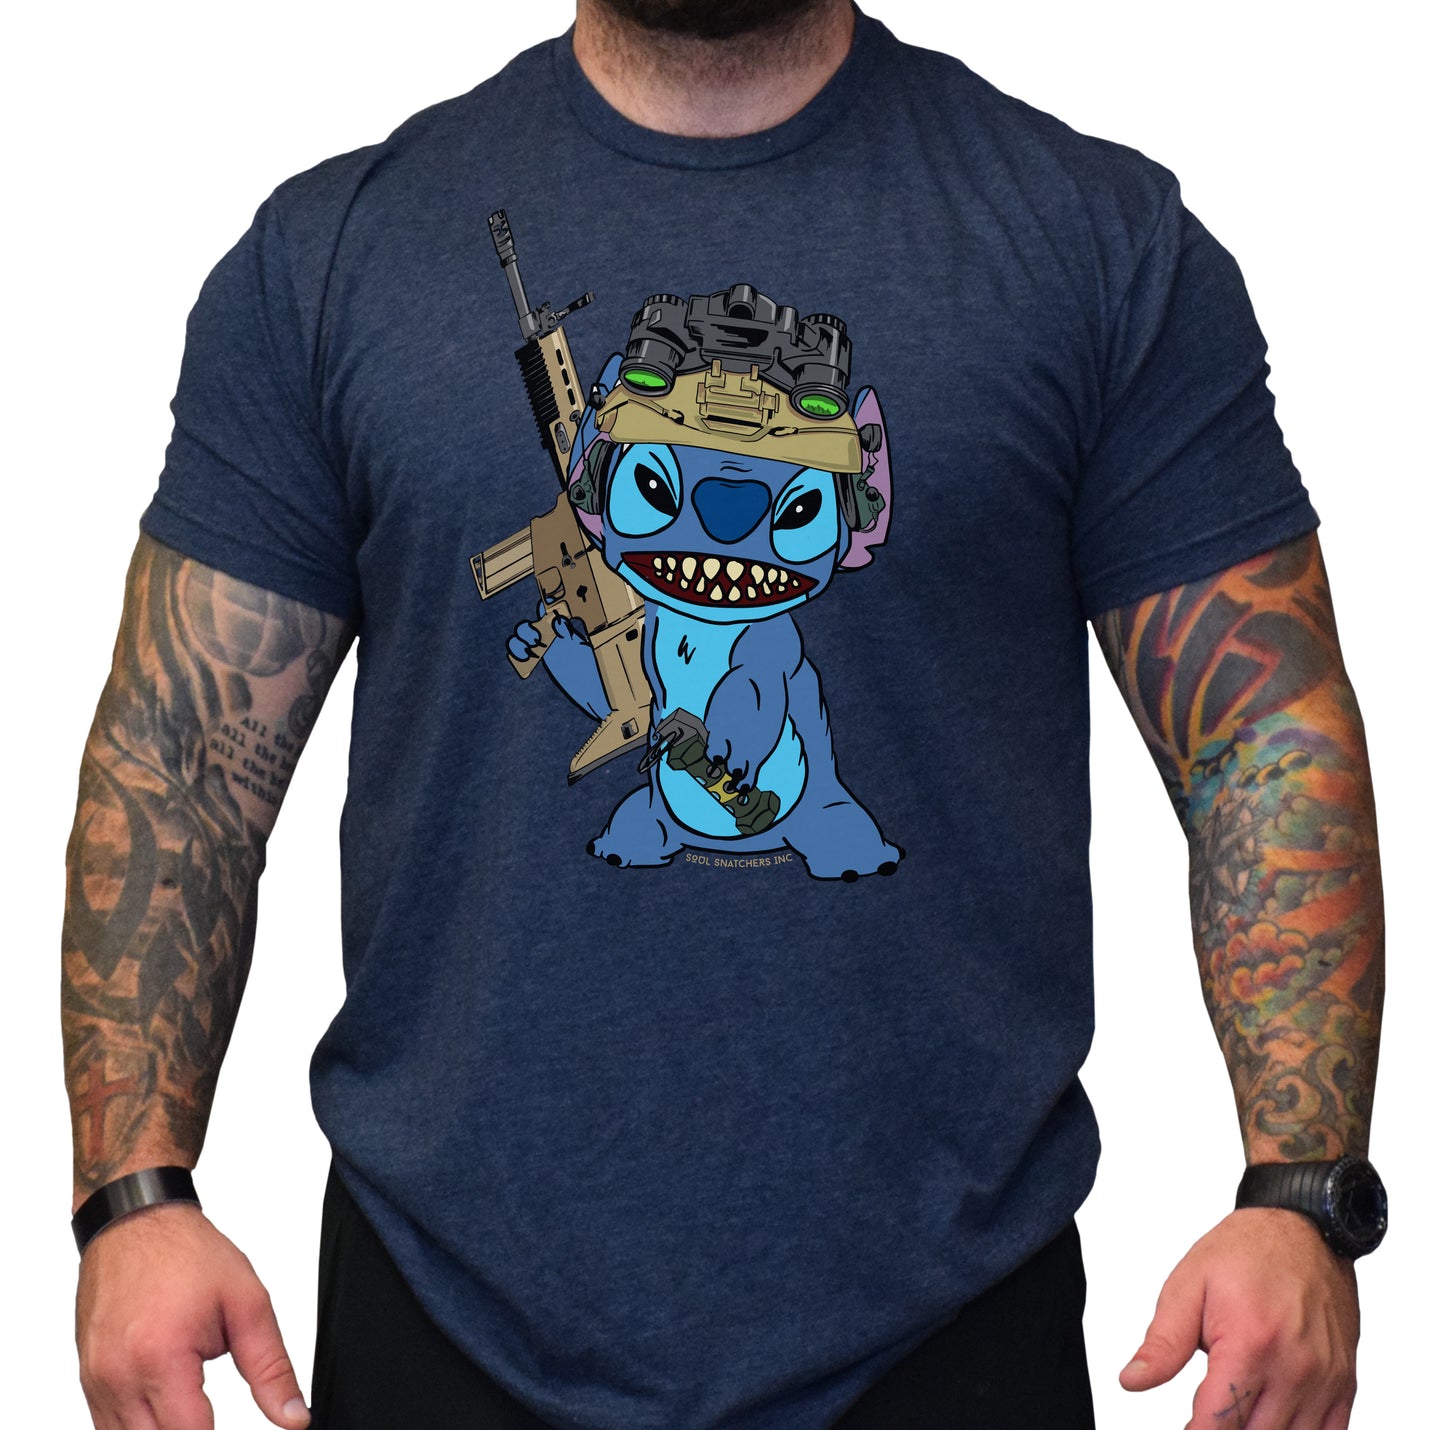 LTD Edition - Stitch Operator Shirt